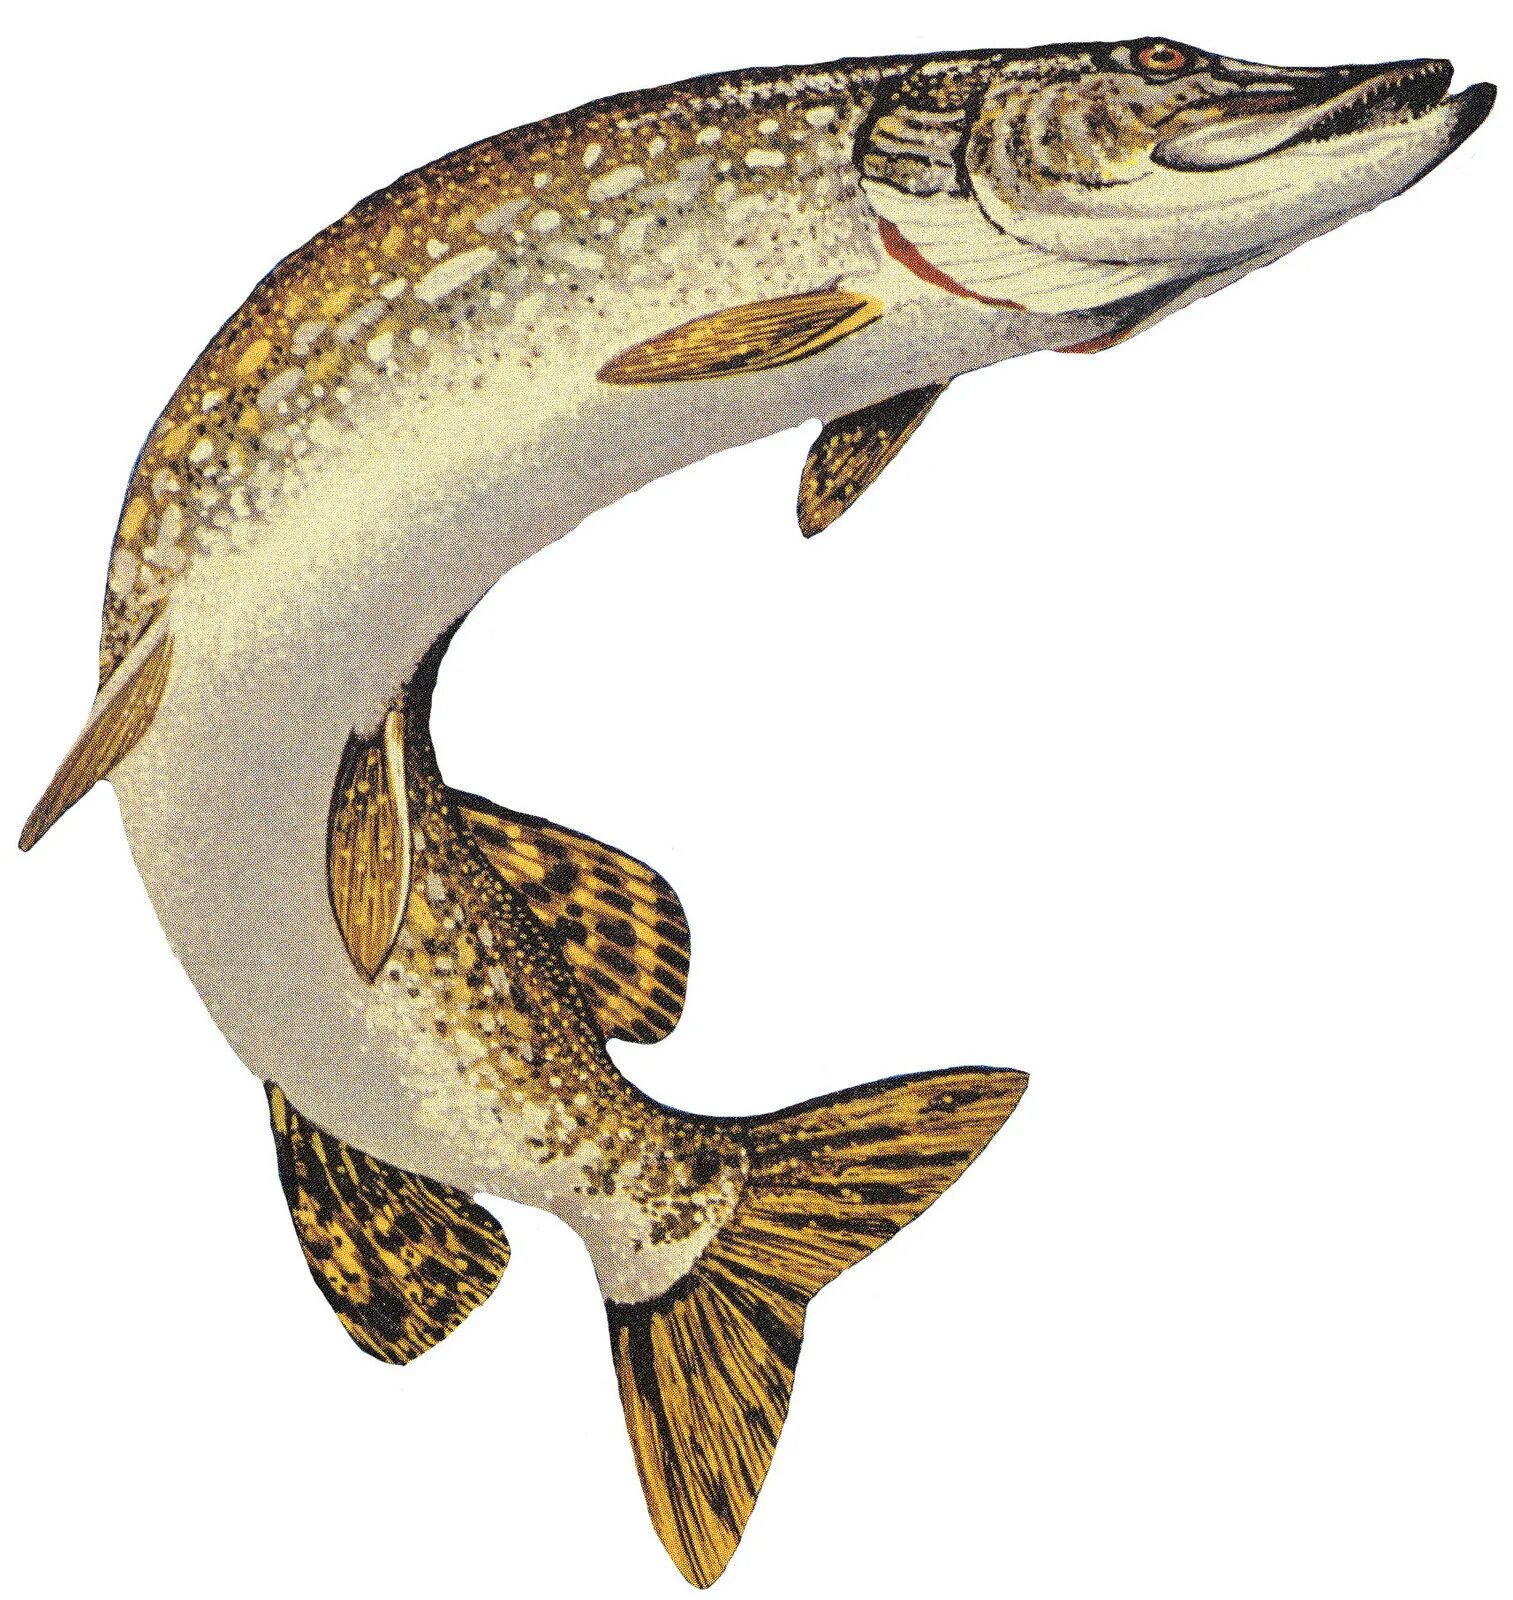 Esox kronneri. Речные рыбы щука. Esox Lucius — обыкновенная щука систематика. Northern Pike рыба.